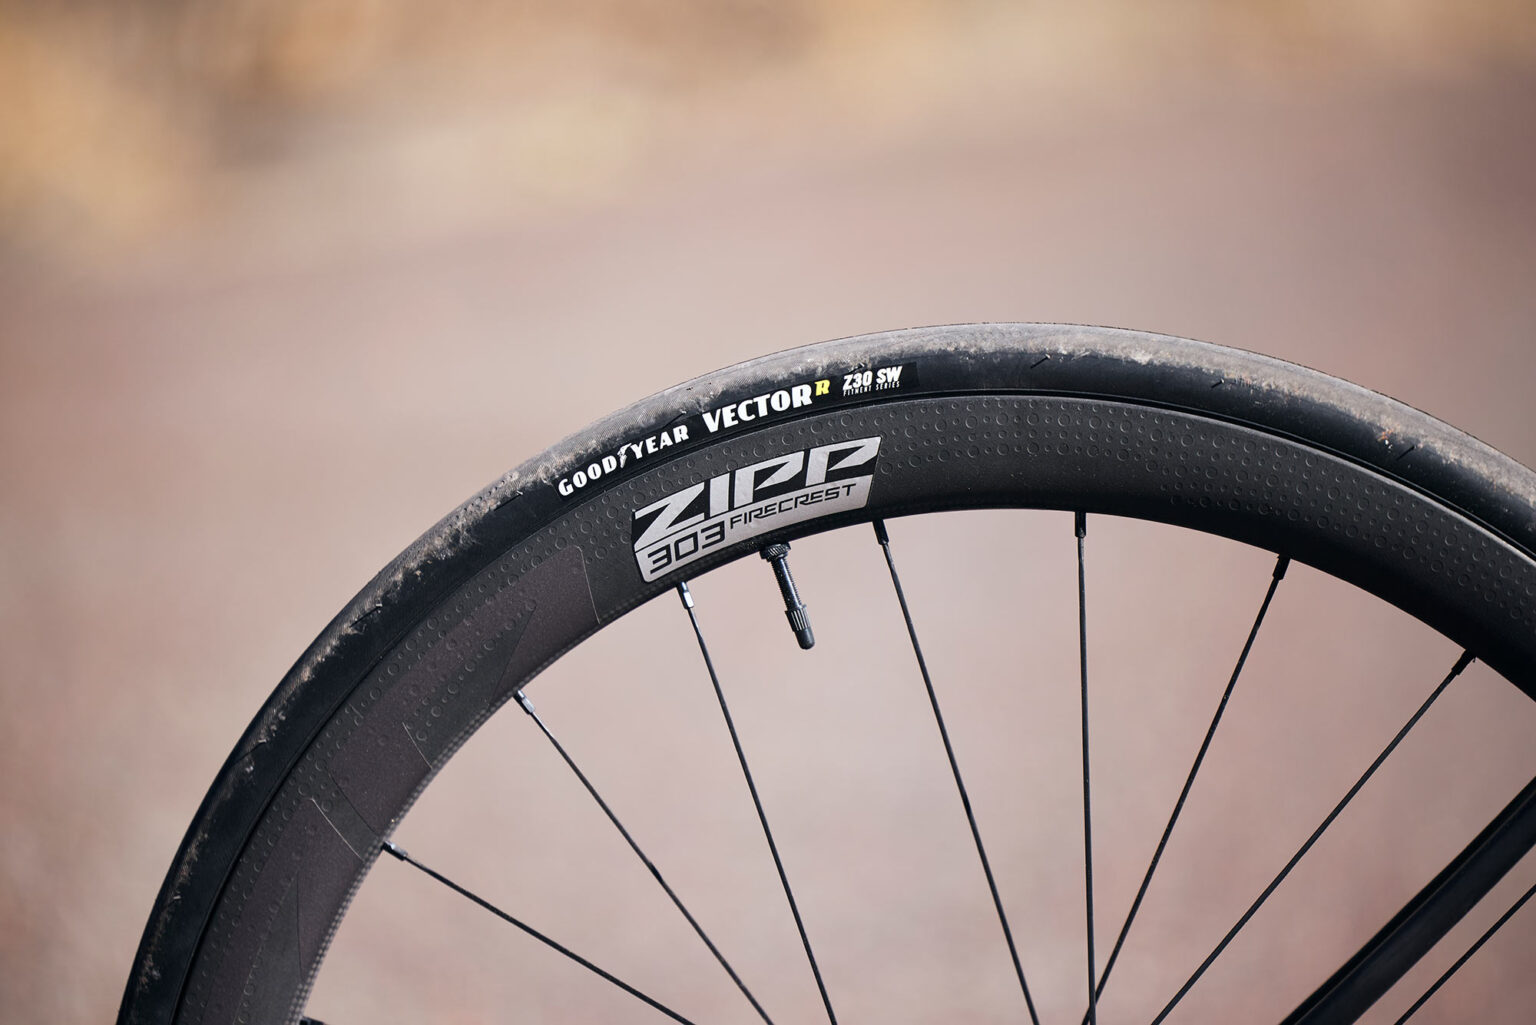 goodyear vector r NSW tires for zipp wheels shown on a bike.